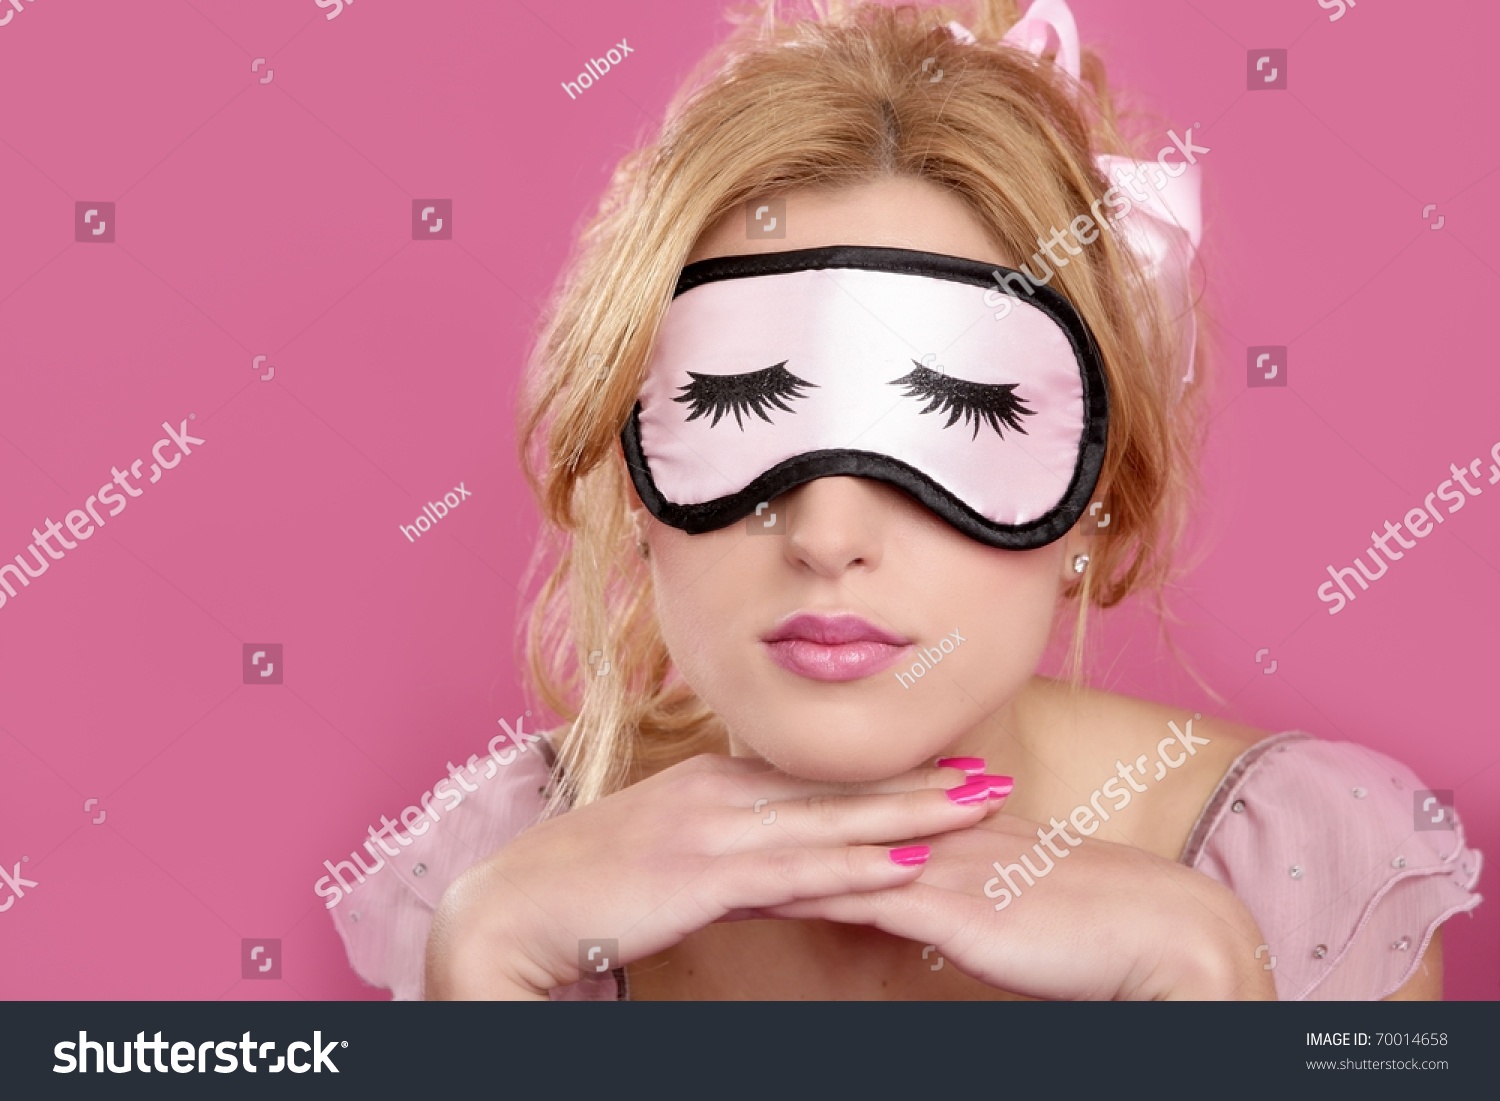 stock-photo-sleep-mask-blind-blonde-relaxed-on-pink-background-portrait-70014658.jpg